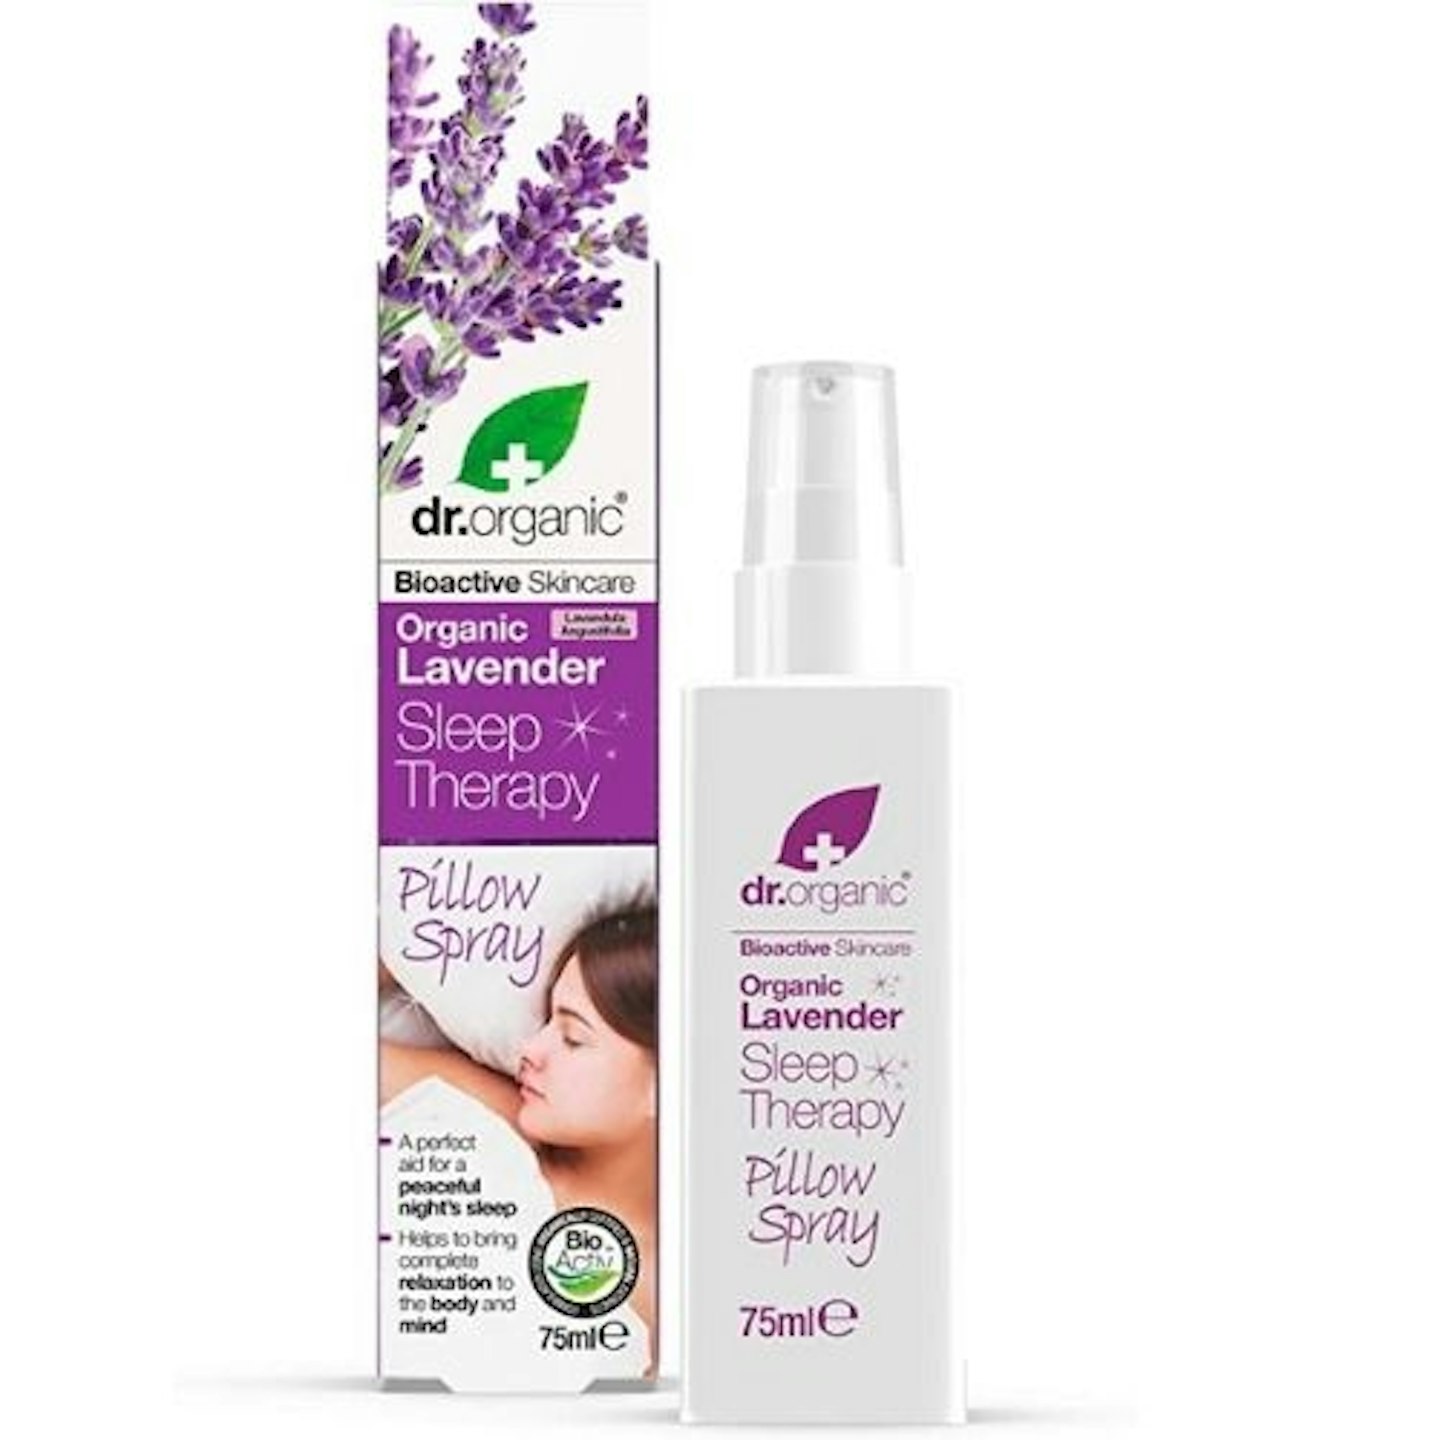 Dr Organic Lavender Sleep Therapy Pillow Spray 